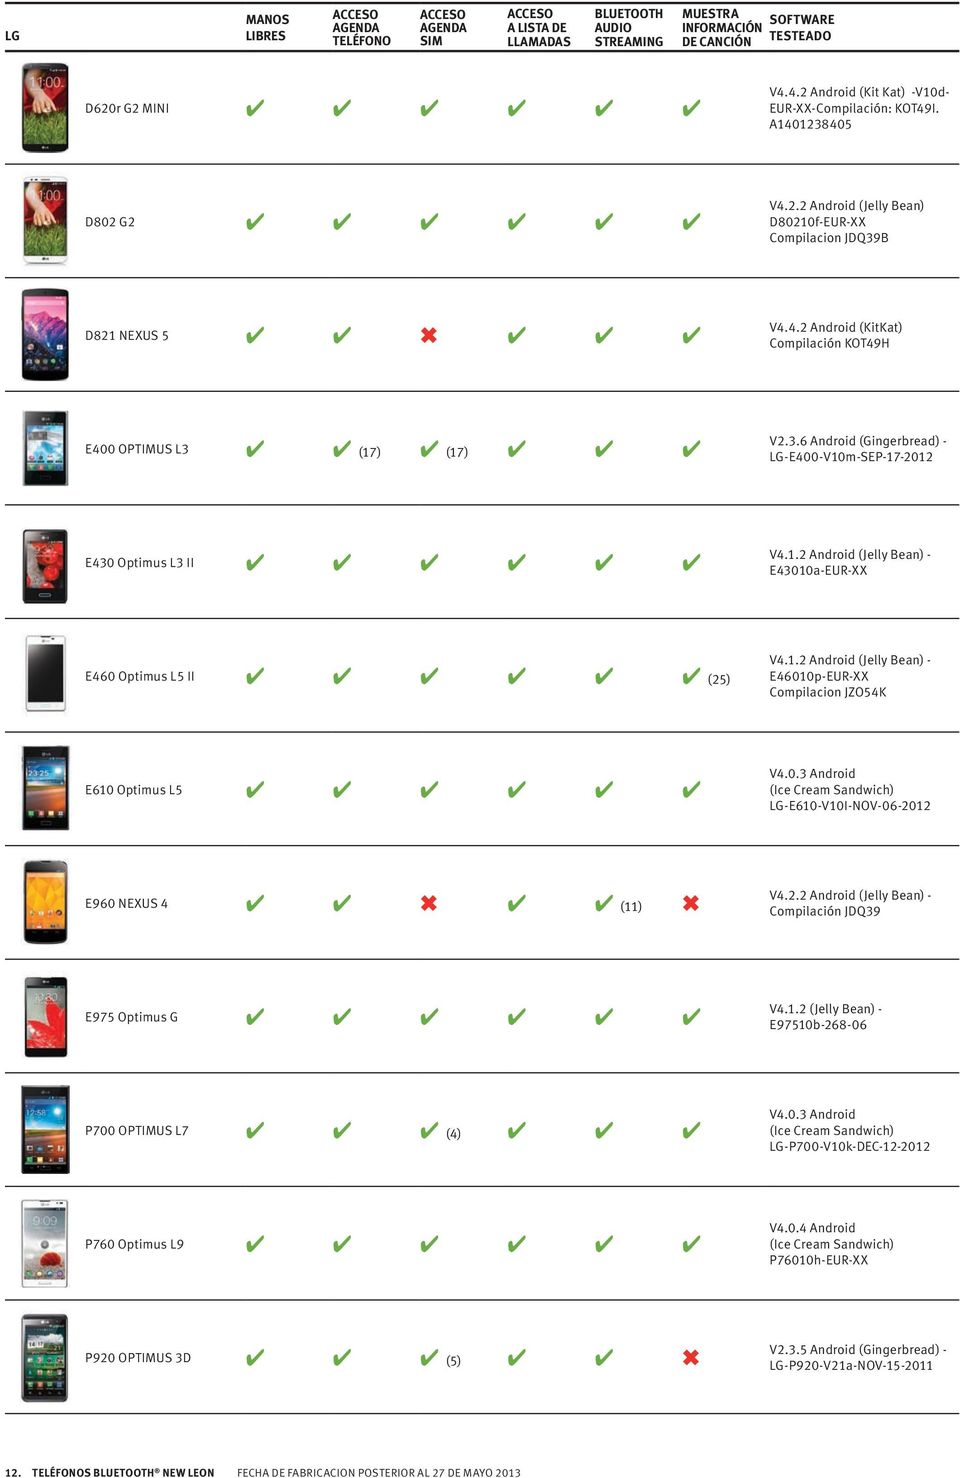 0.3 Android (Ice Cream Sandwich) LG-E610-V10I-NOV-06-2012 E960 NEXUS 4 (11) V4.2.2 Android (Jelly Bean) - Compilación JDQ39 E975 Optimus G V4.1.2 (Jelly Bean) - E97510b-268-06 P700 OPTIMUS L7 (4) V4.